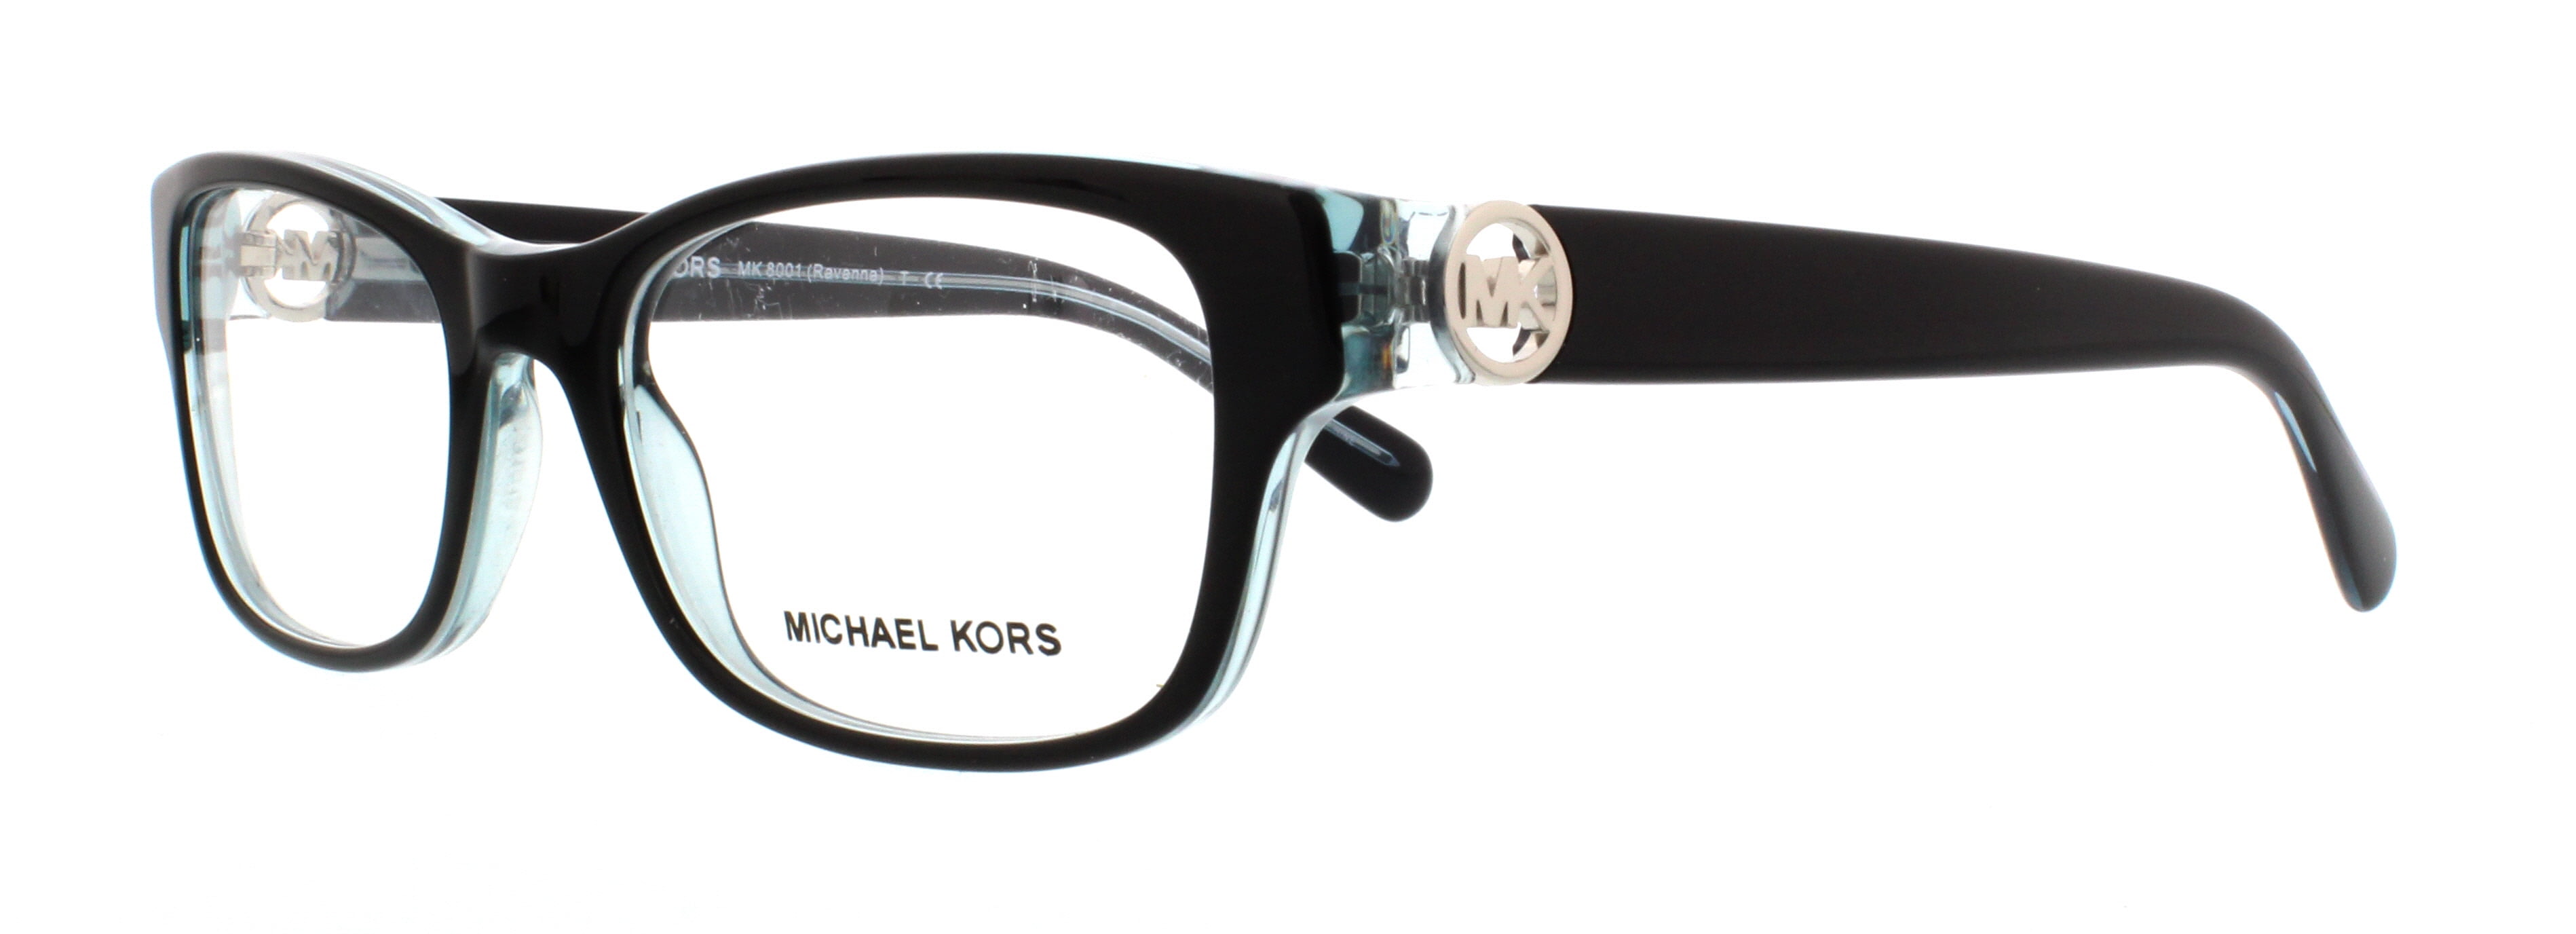 MICHAEL KORS Eyeglasses MK 8001 3001 Black Blue 51MM - Walmart.com